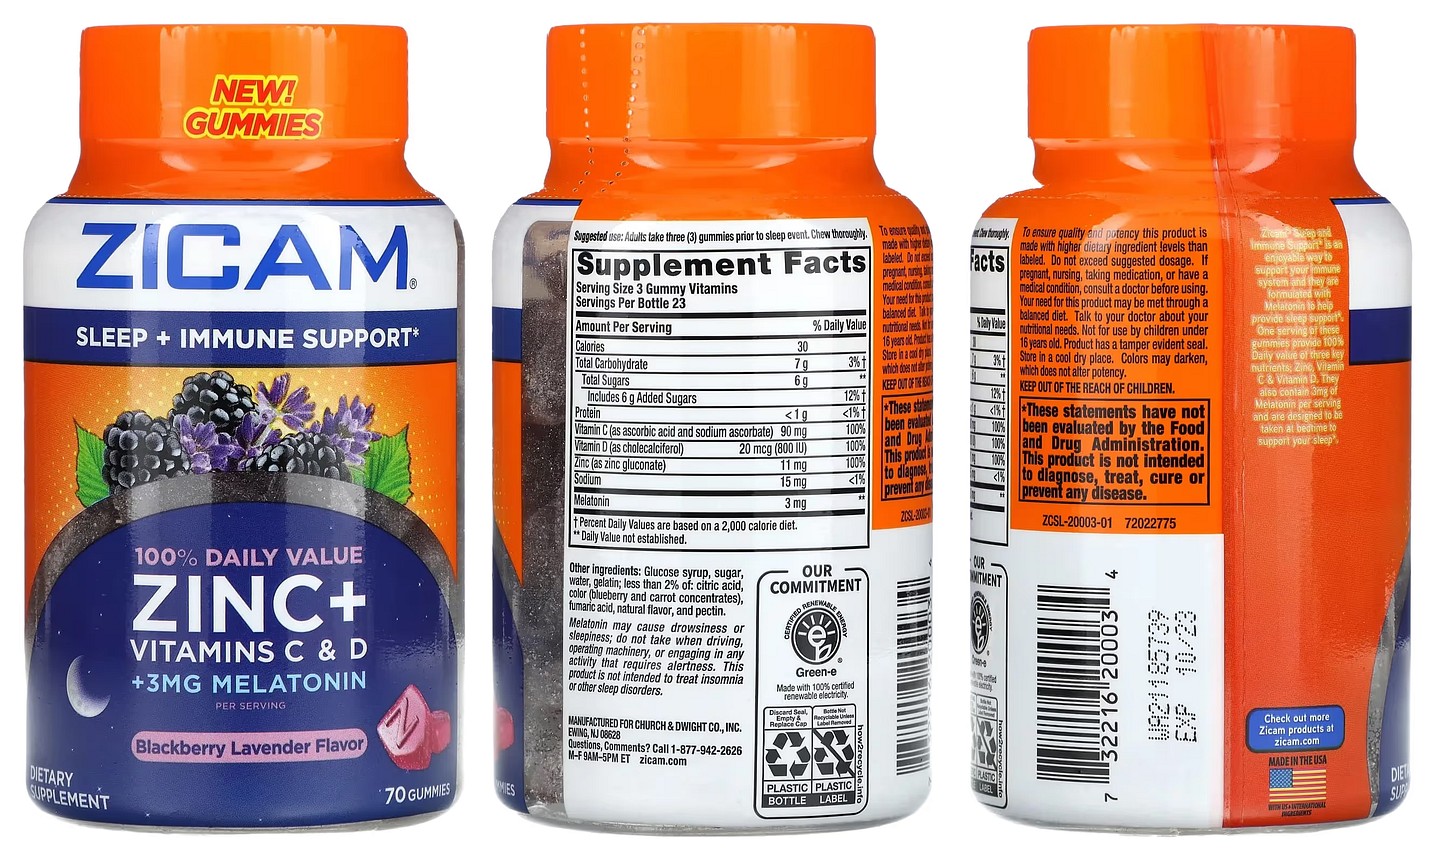 Zicam, Sleep + Immune Support packaging